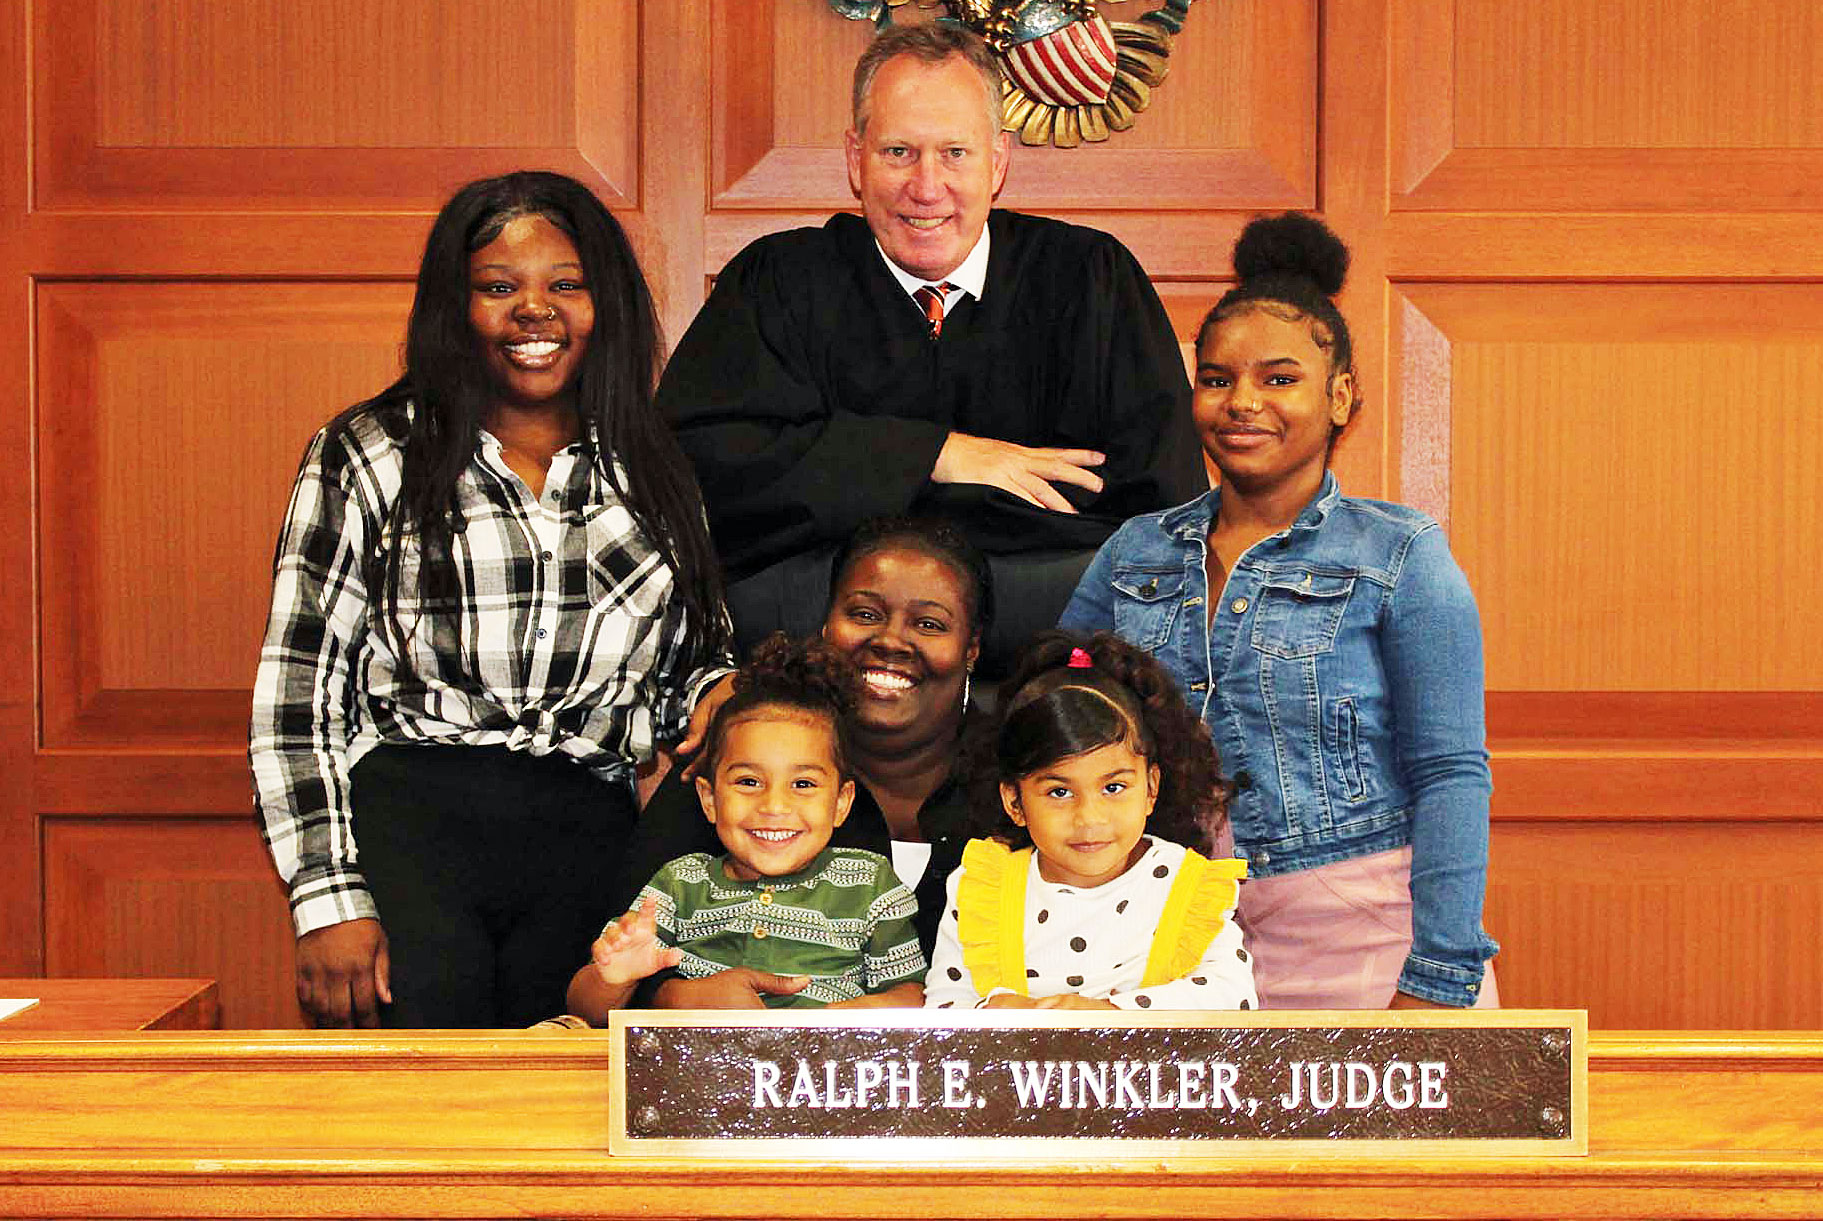 Judge Winkler honors a new family